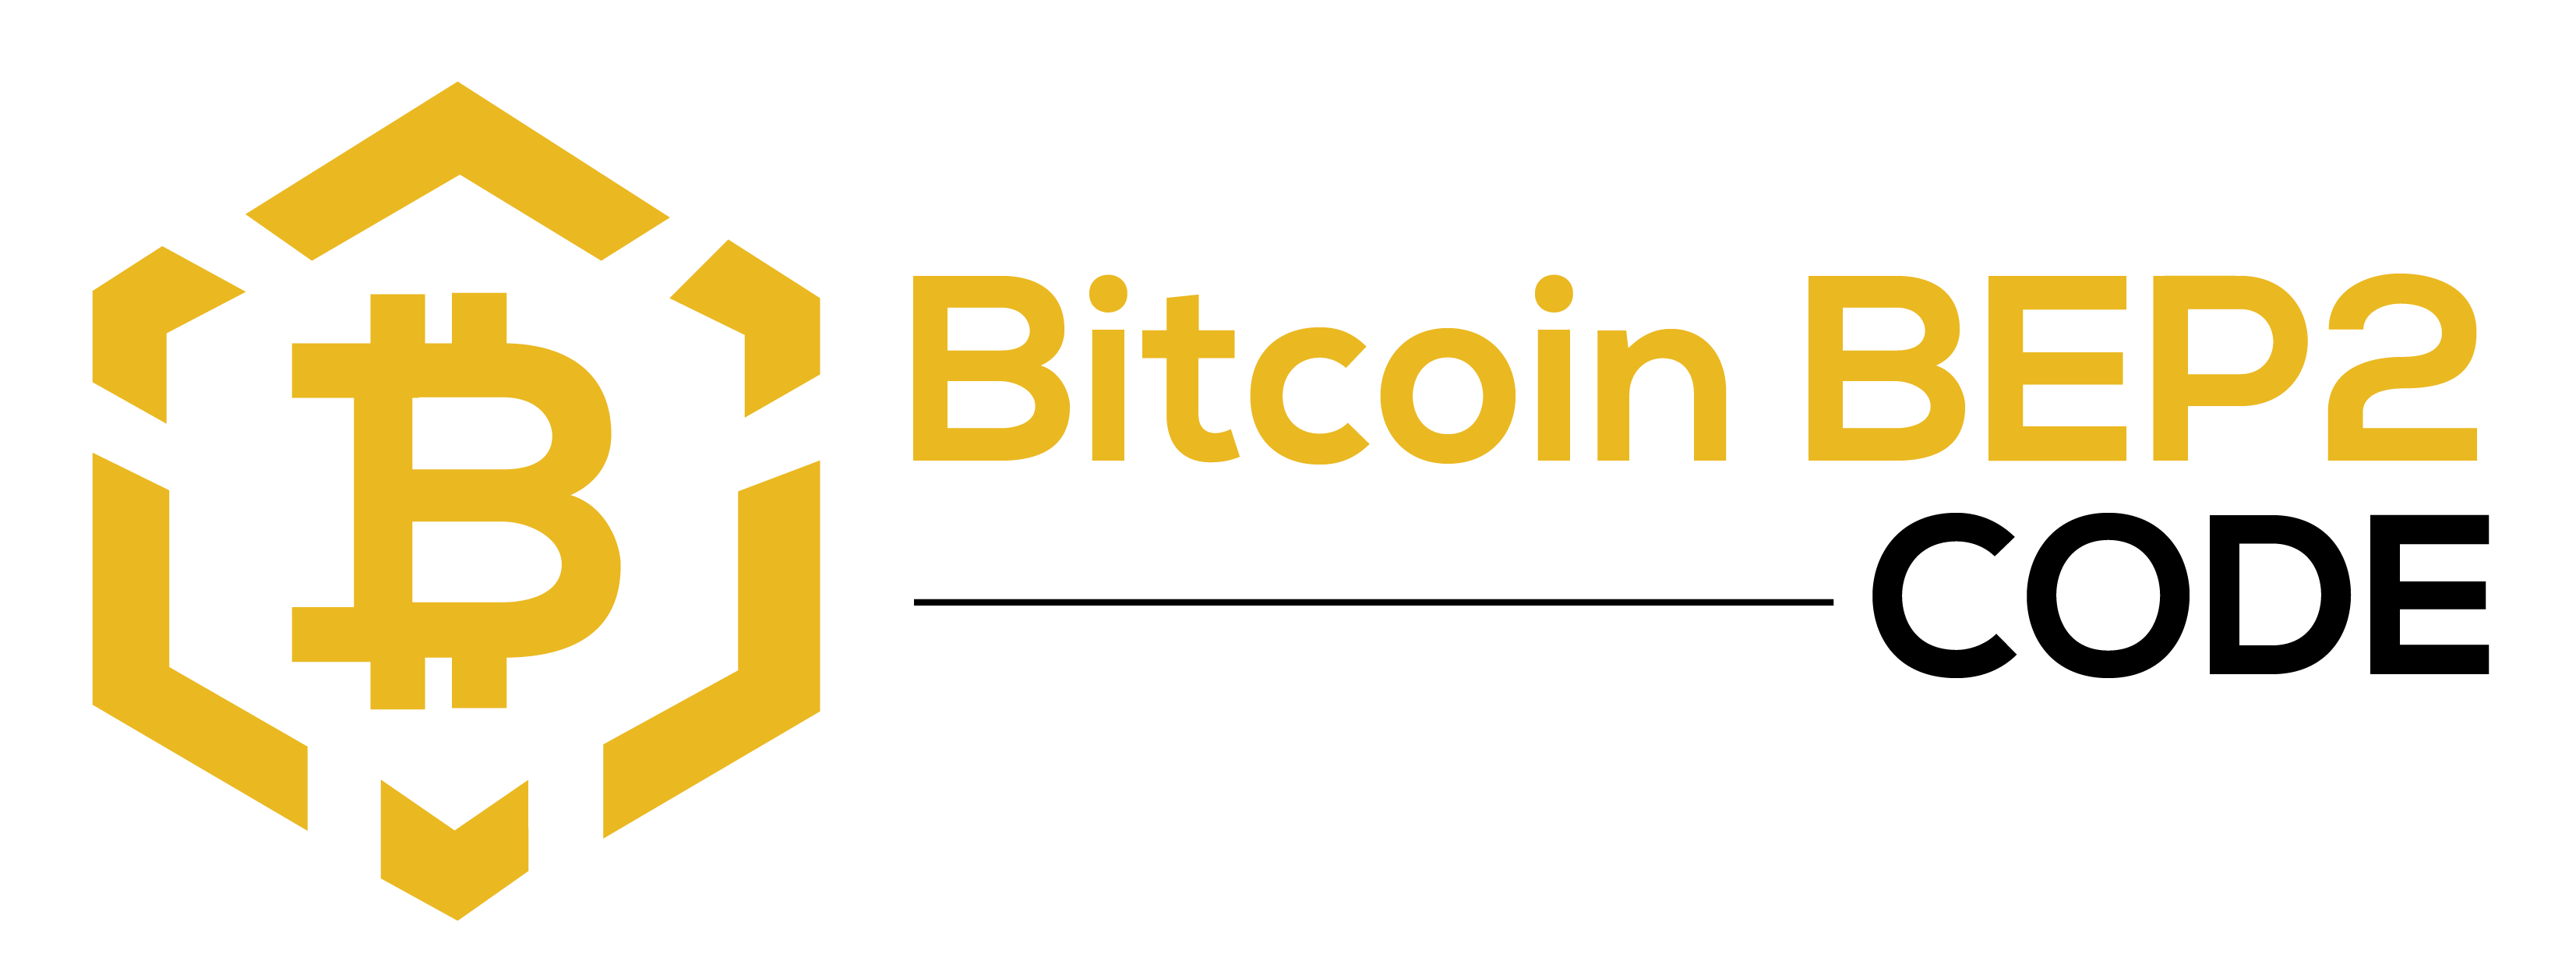 Bitcoin BEP2 Code - ติดต่อกับพวกเรา